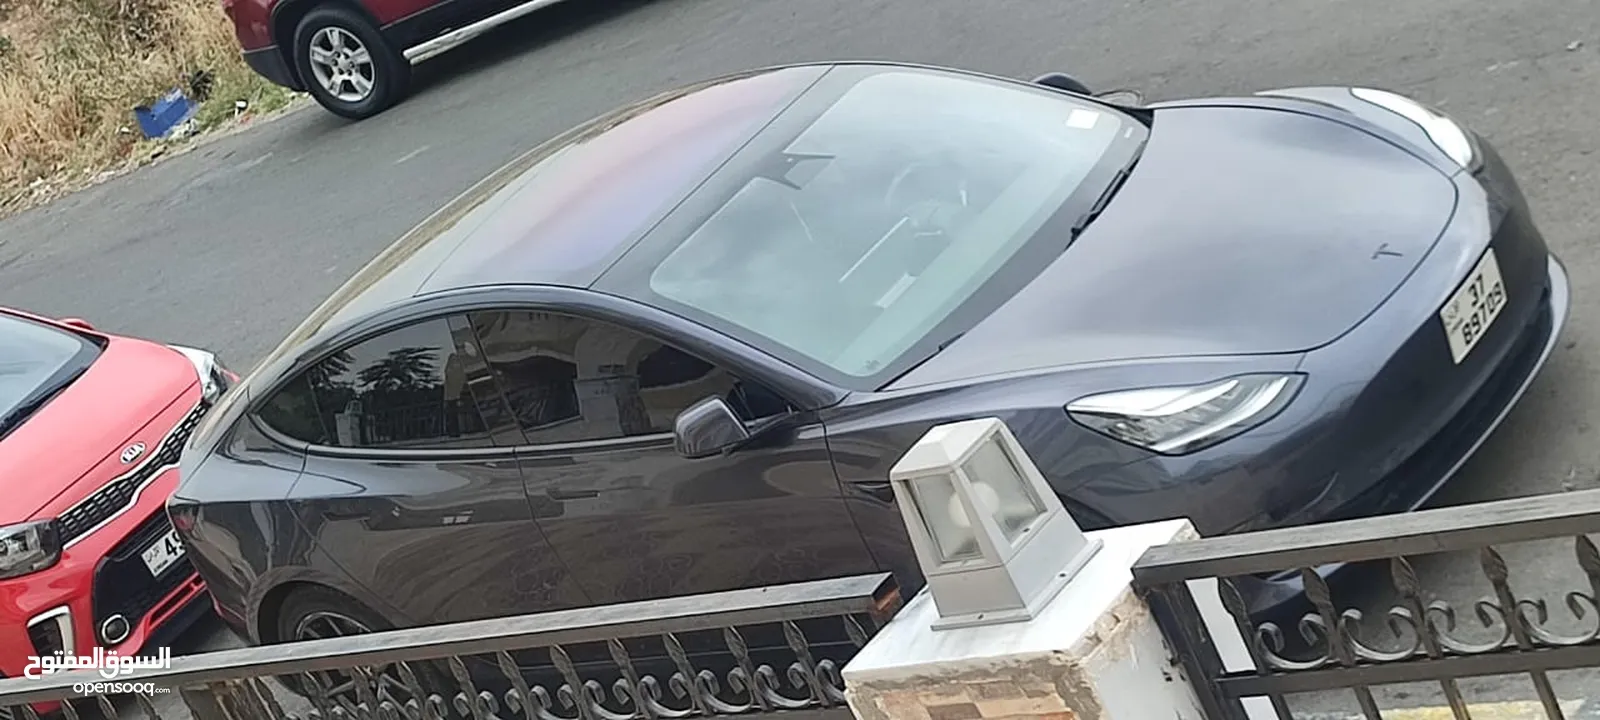 سياره تيسلا للبيع موديل 2019